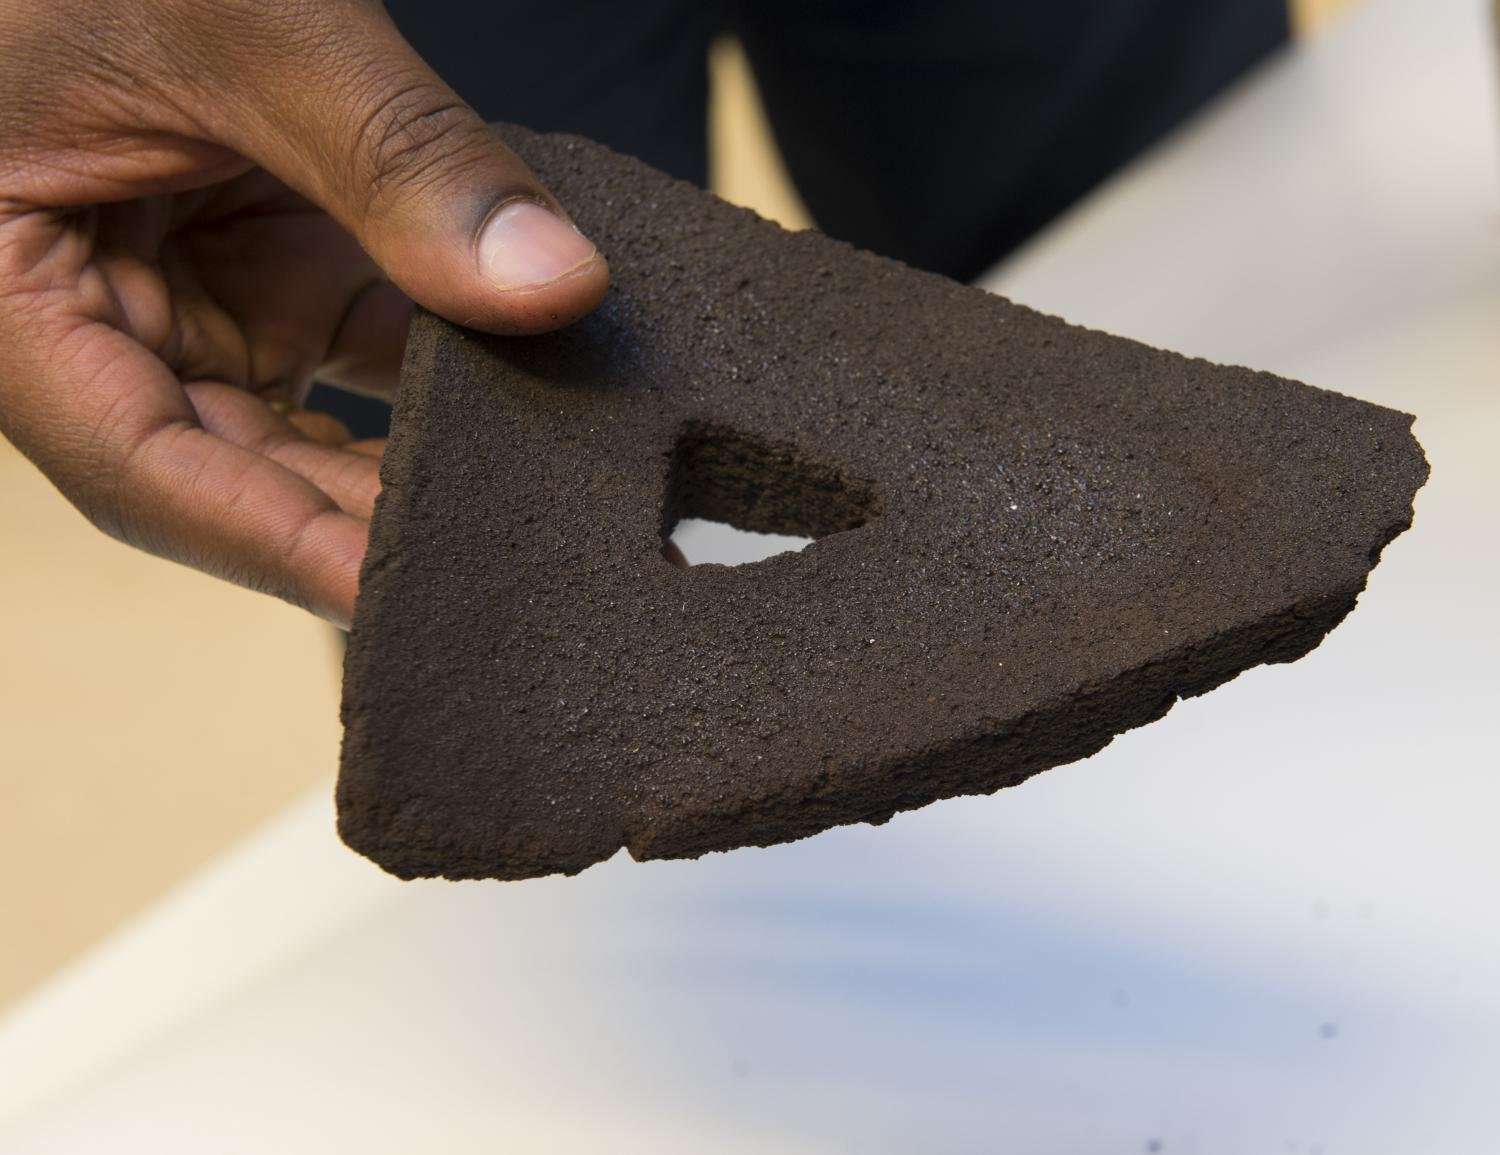 image for Printing bricks from moondust using the sun's heat